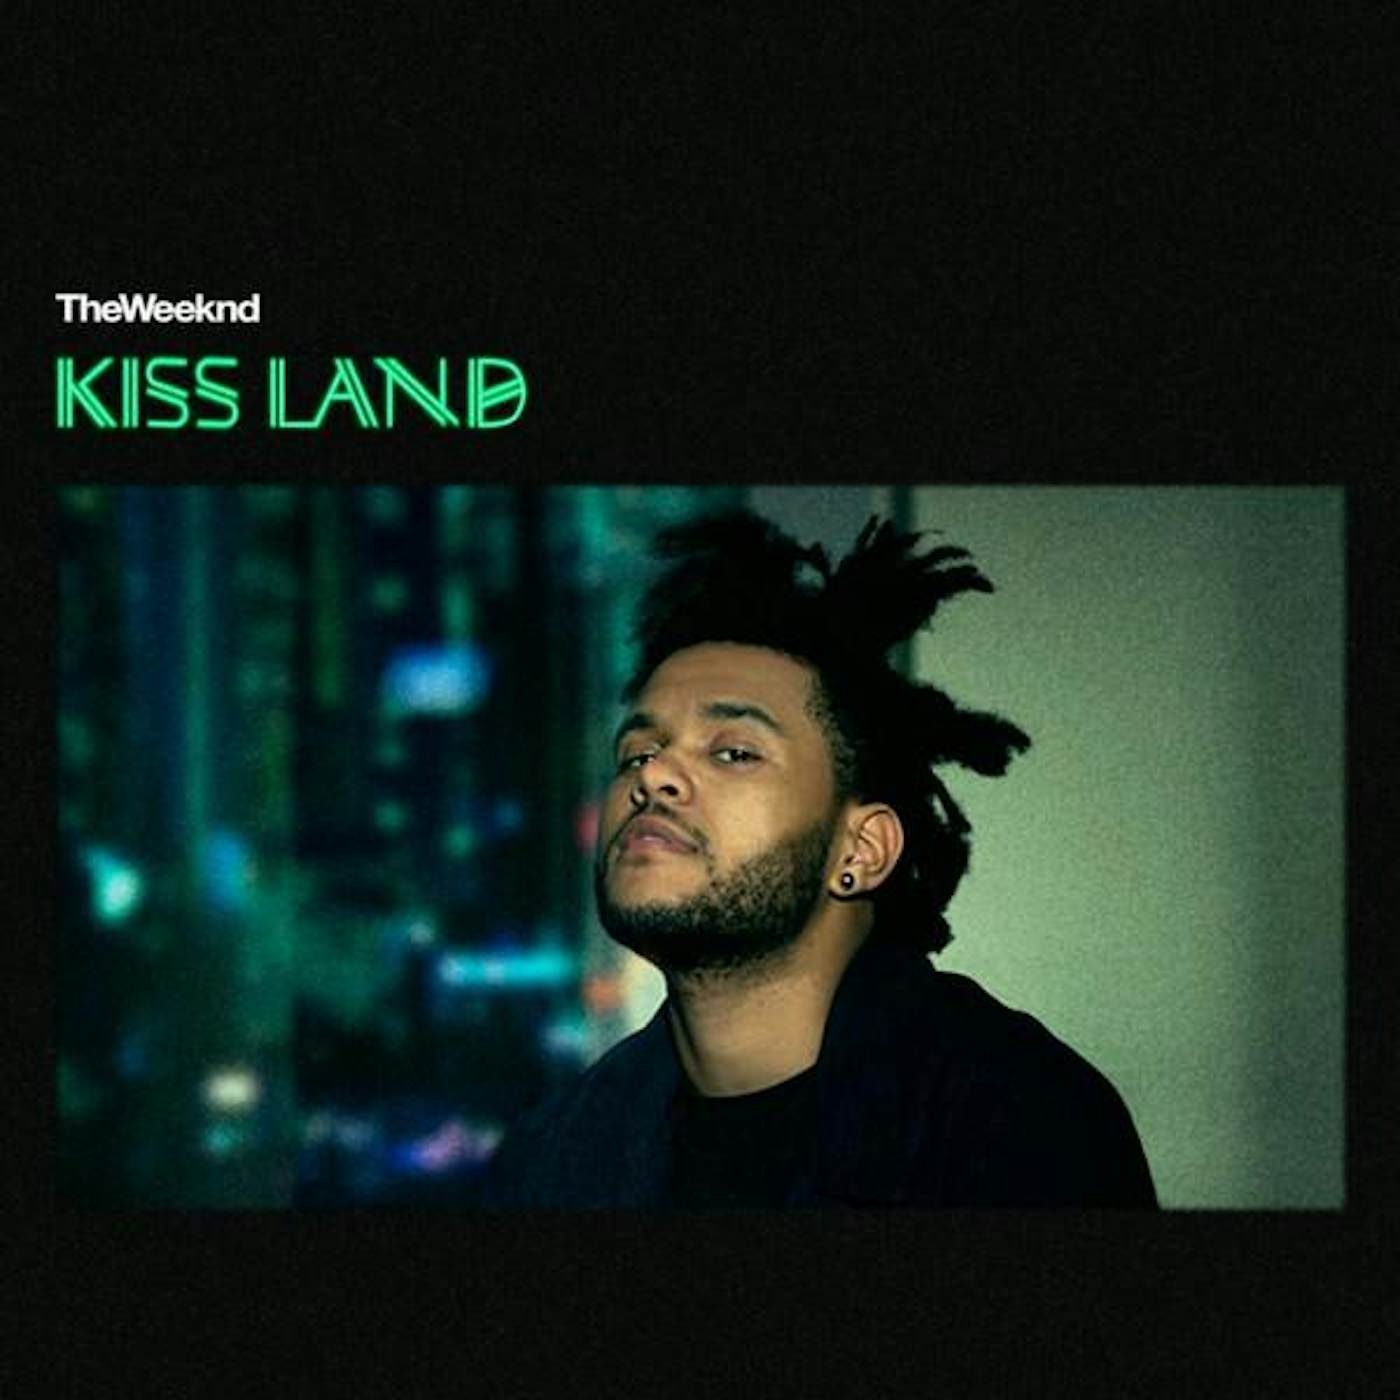 The Weeknd Kiss Land Vinyl Record